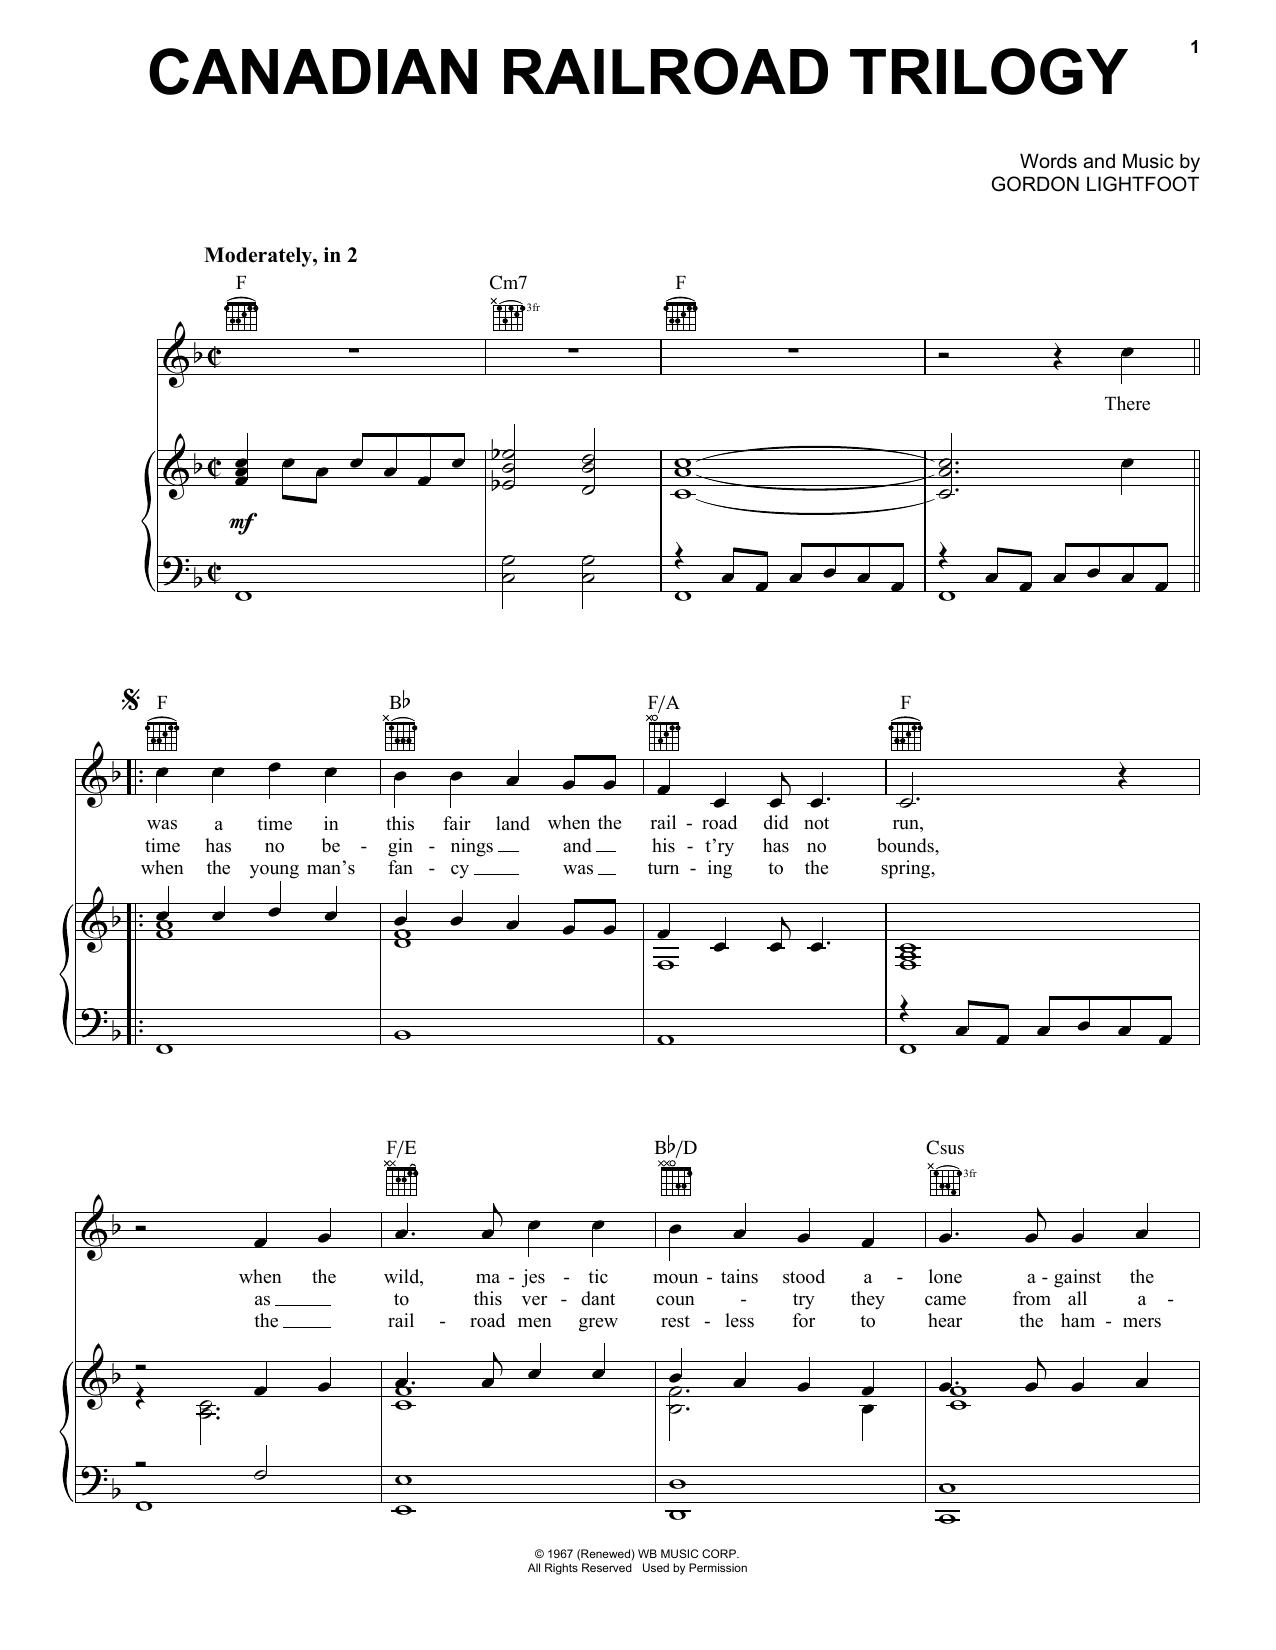 Gordon Lightfoot Canadian Railroad Trilogy Sheet Music Notes & Chords for Lyrics & Chords - Download or Print PDF